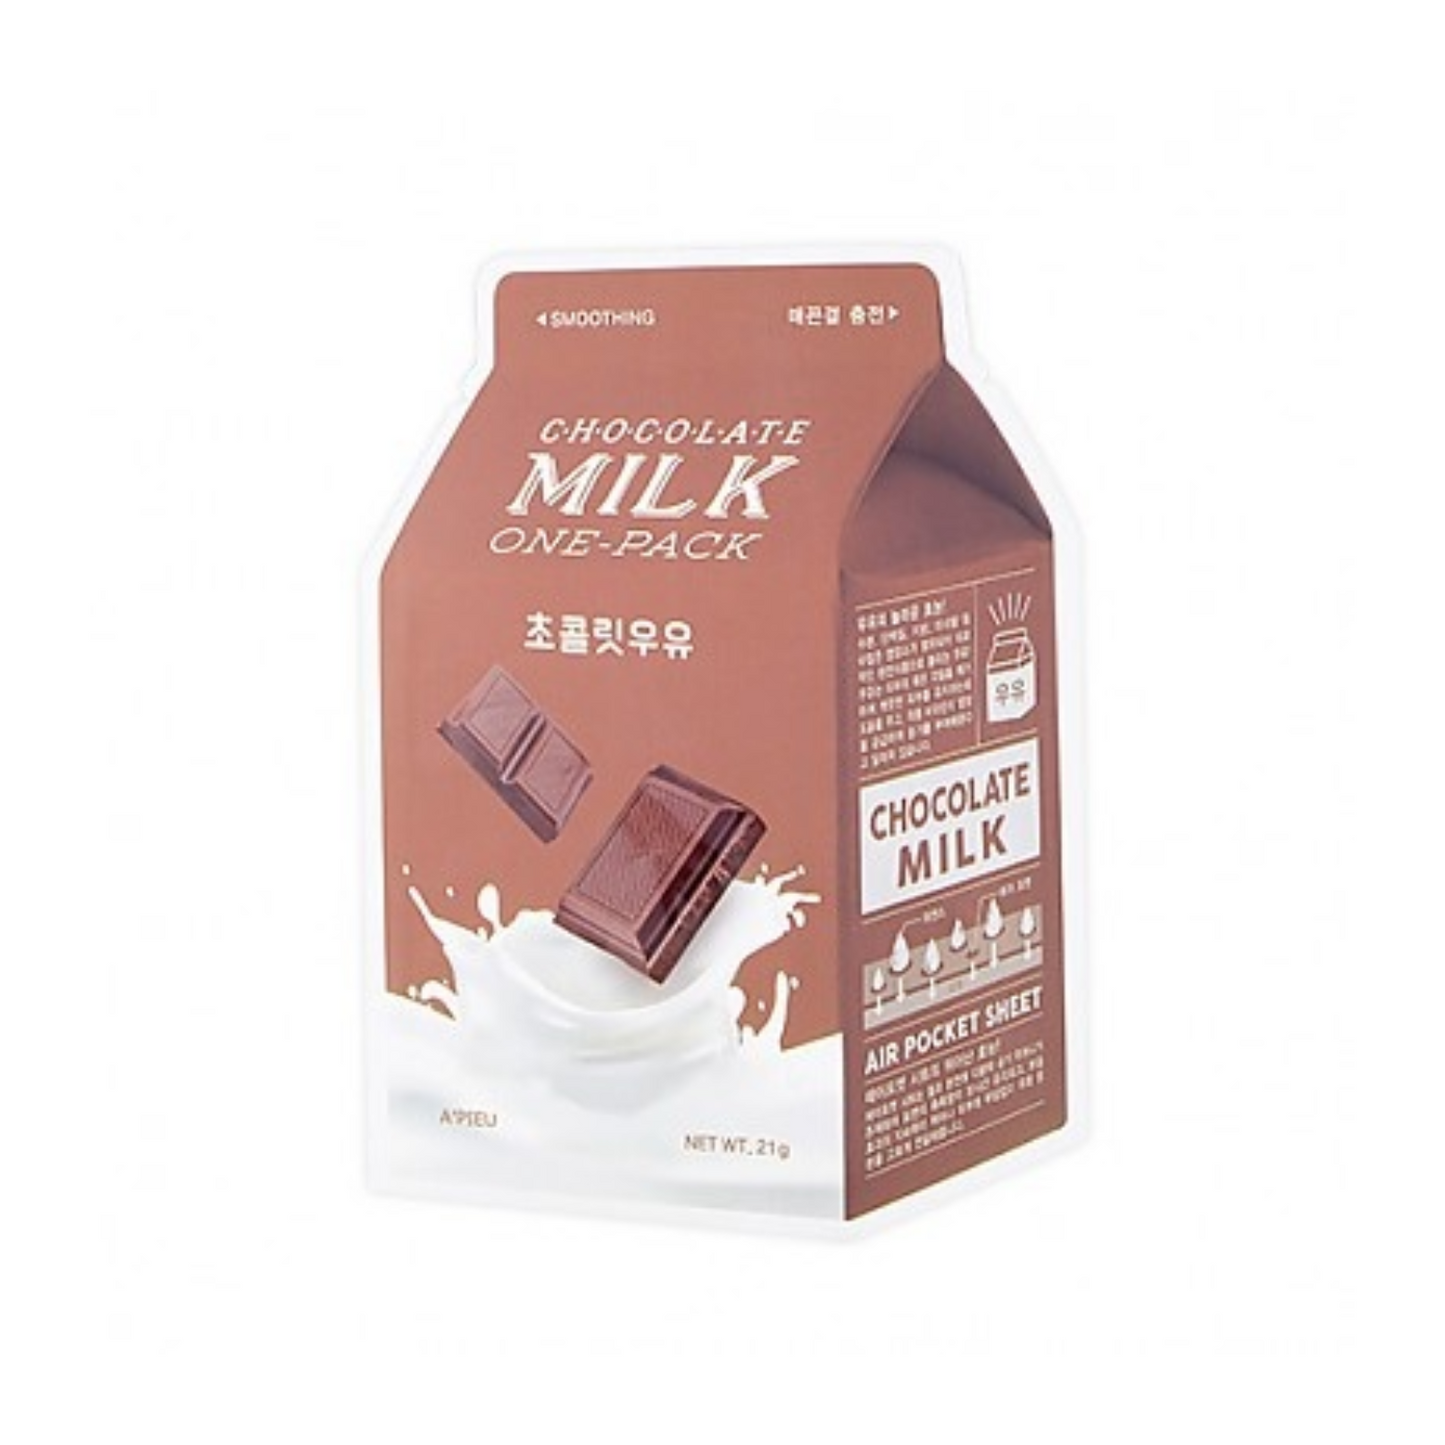 APIEU Milk One Pack #Chocolate Milk